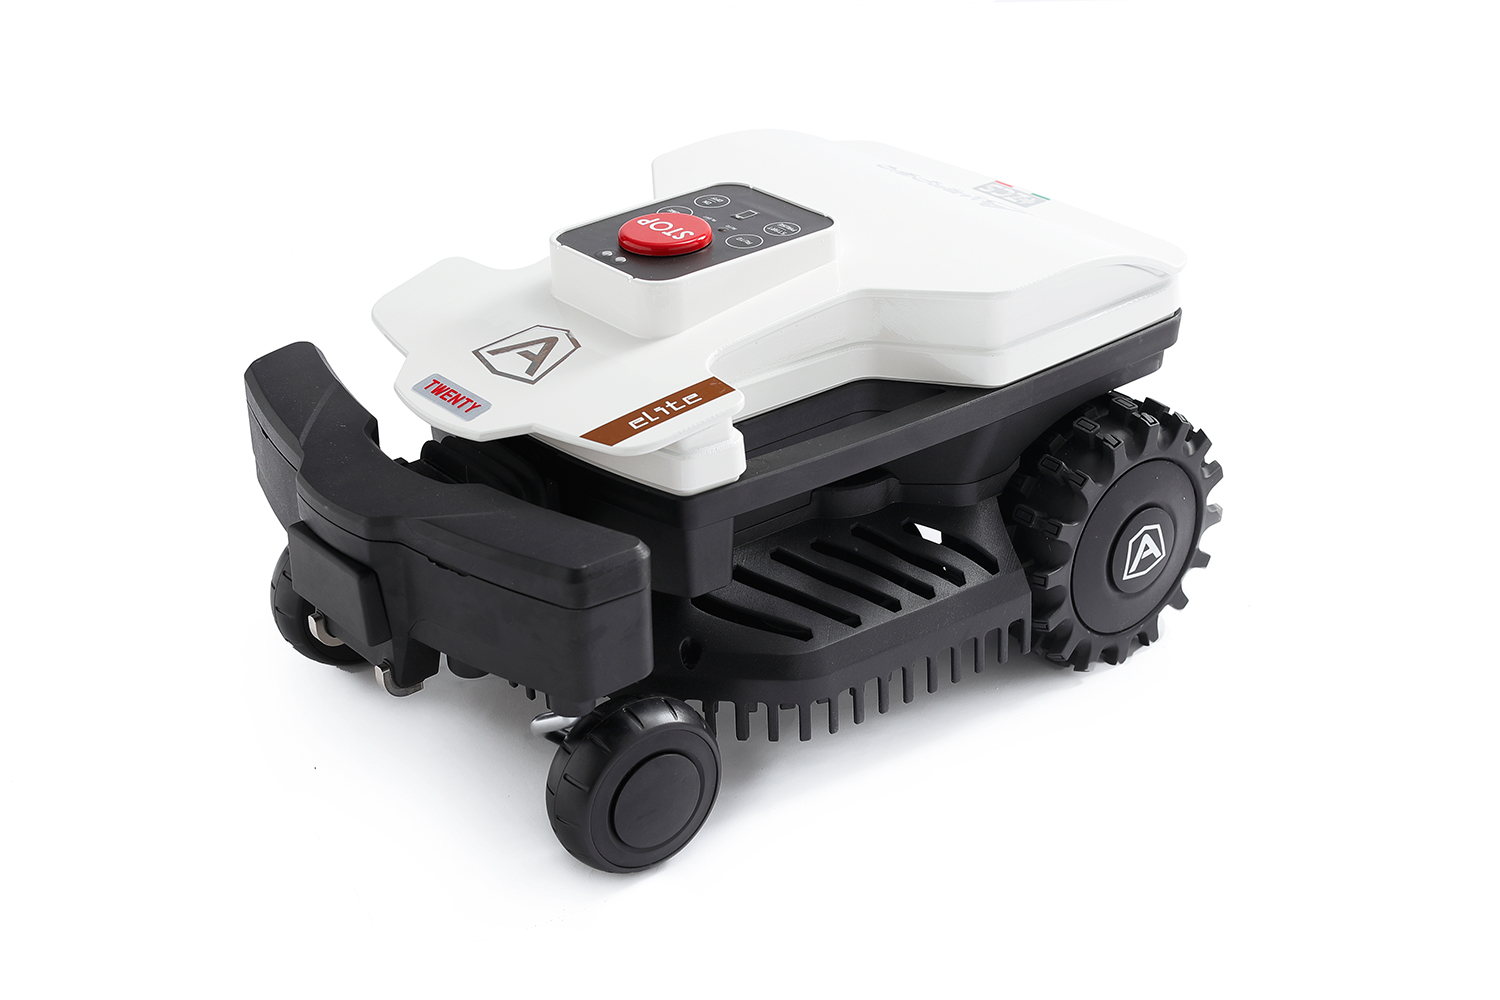 Ambrogio 25 Elite Robot Lawn mower